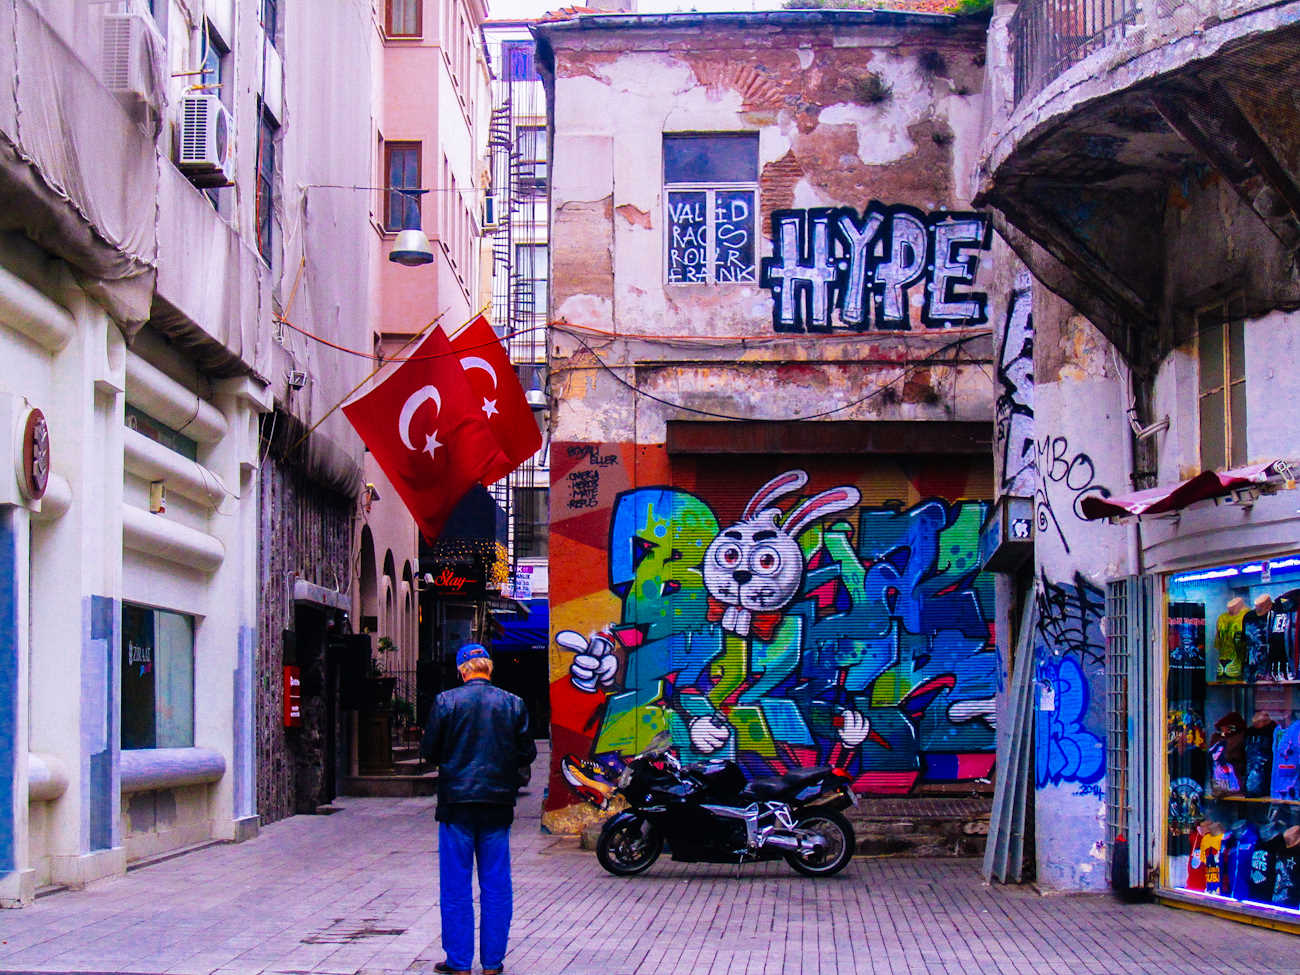 Turchia e droghe leggere